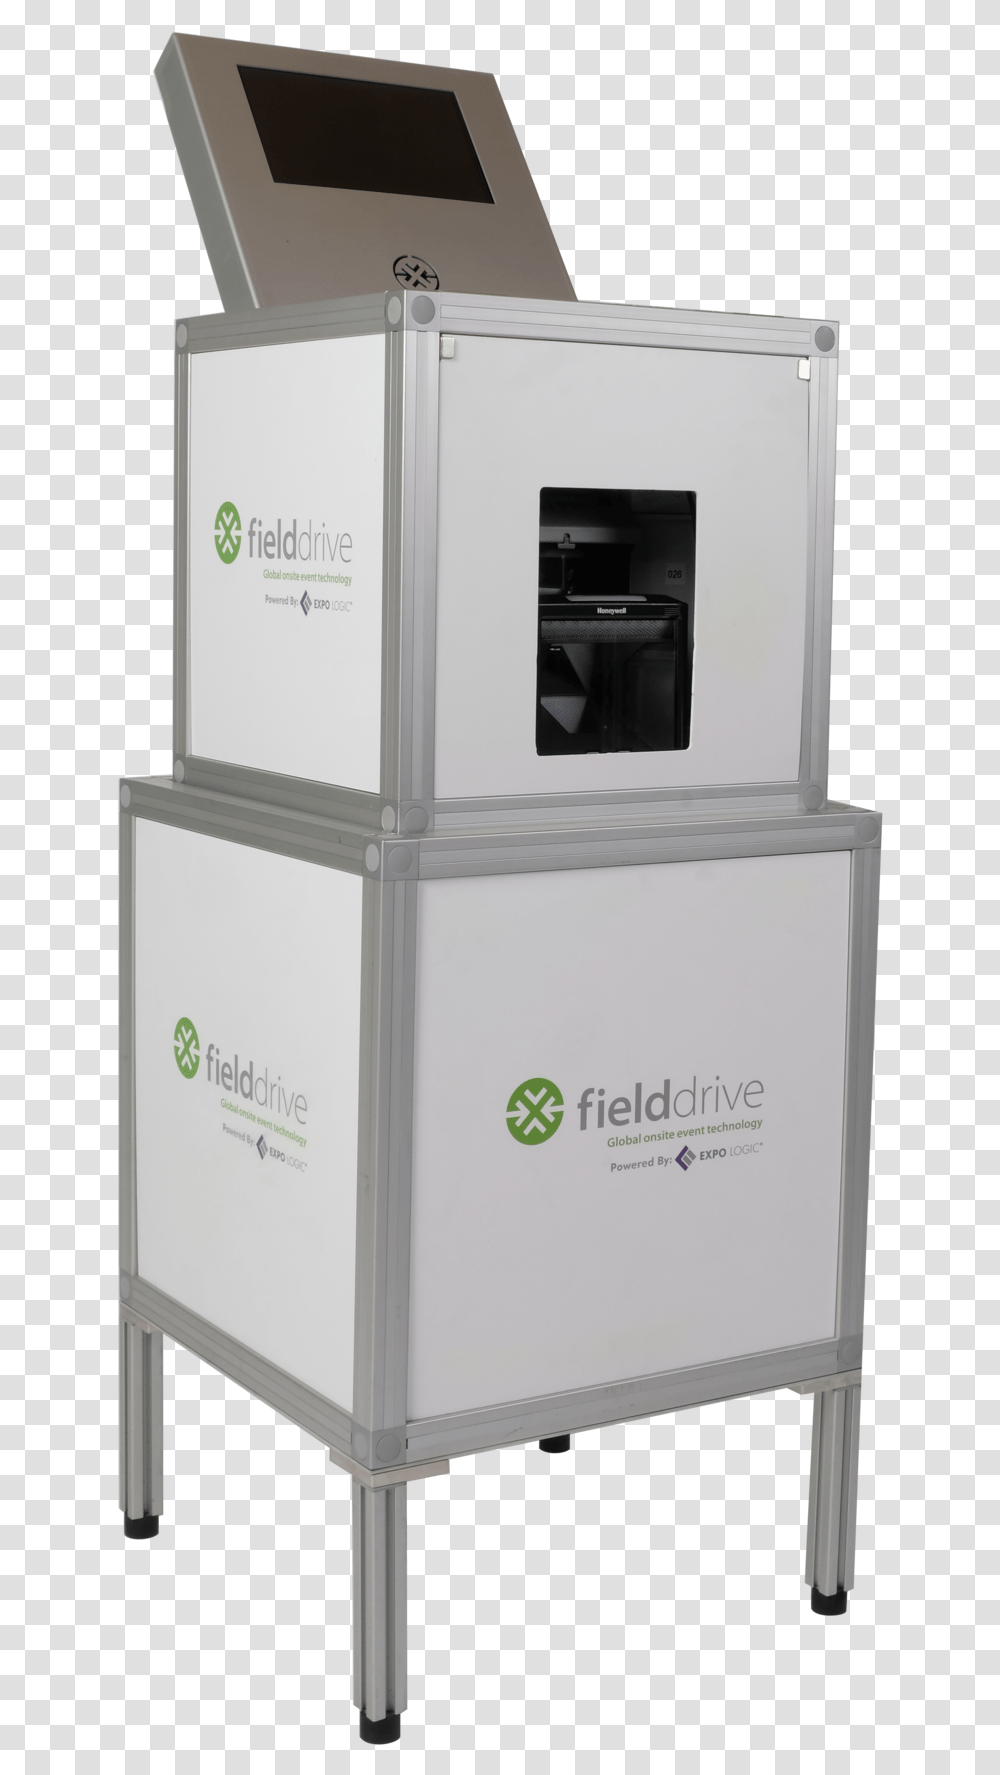 Kiosk Fielddrive, Mailbox, Letterbox, Machine Transparent Png